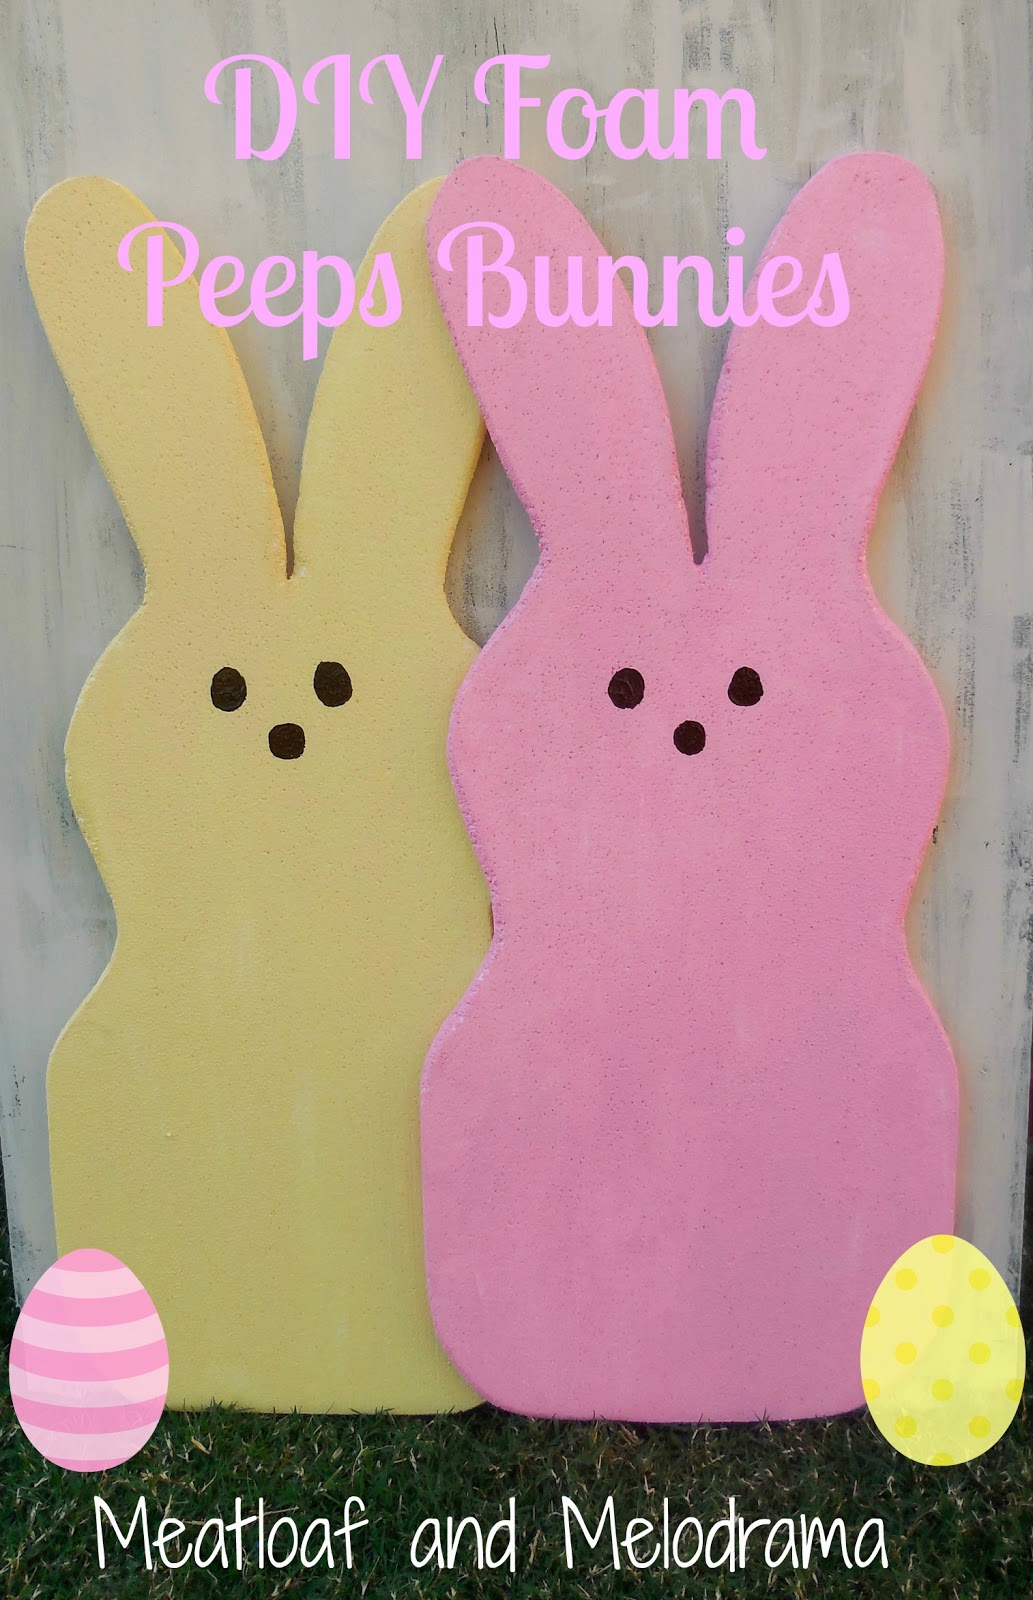 peeps bunnies made from foam